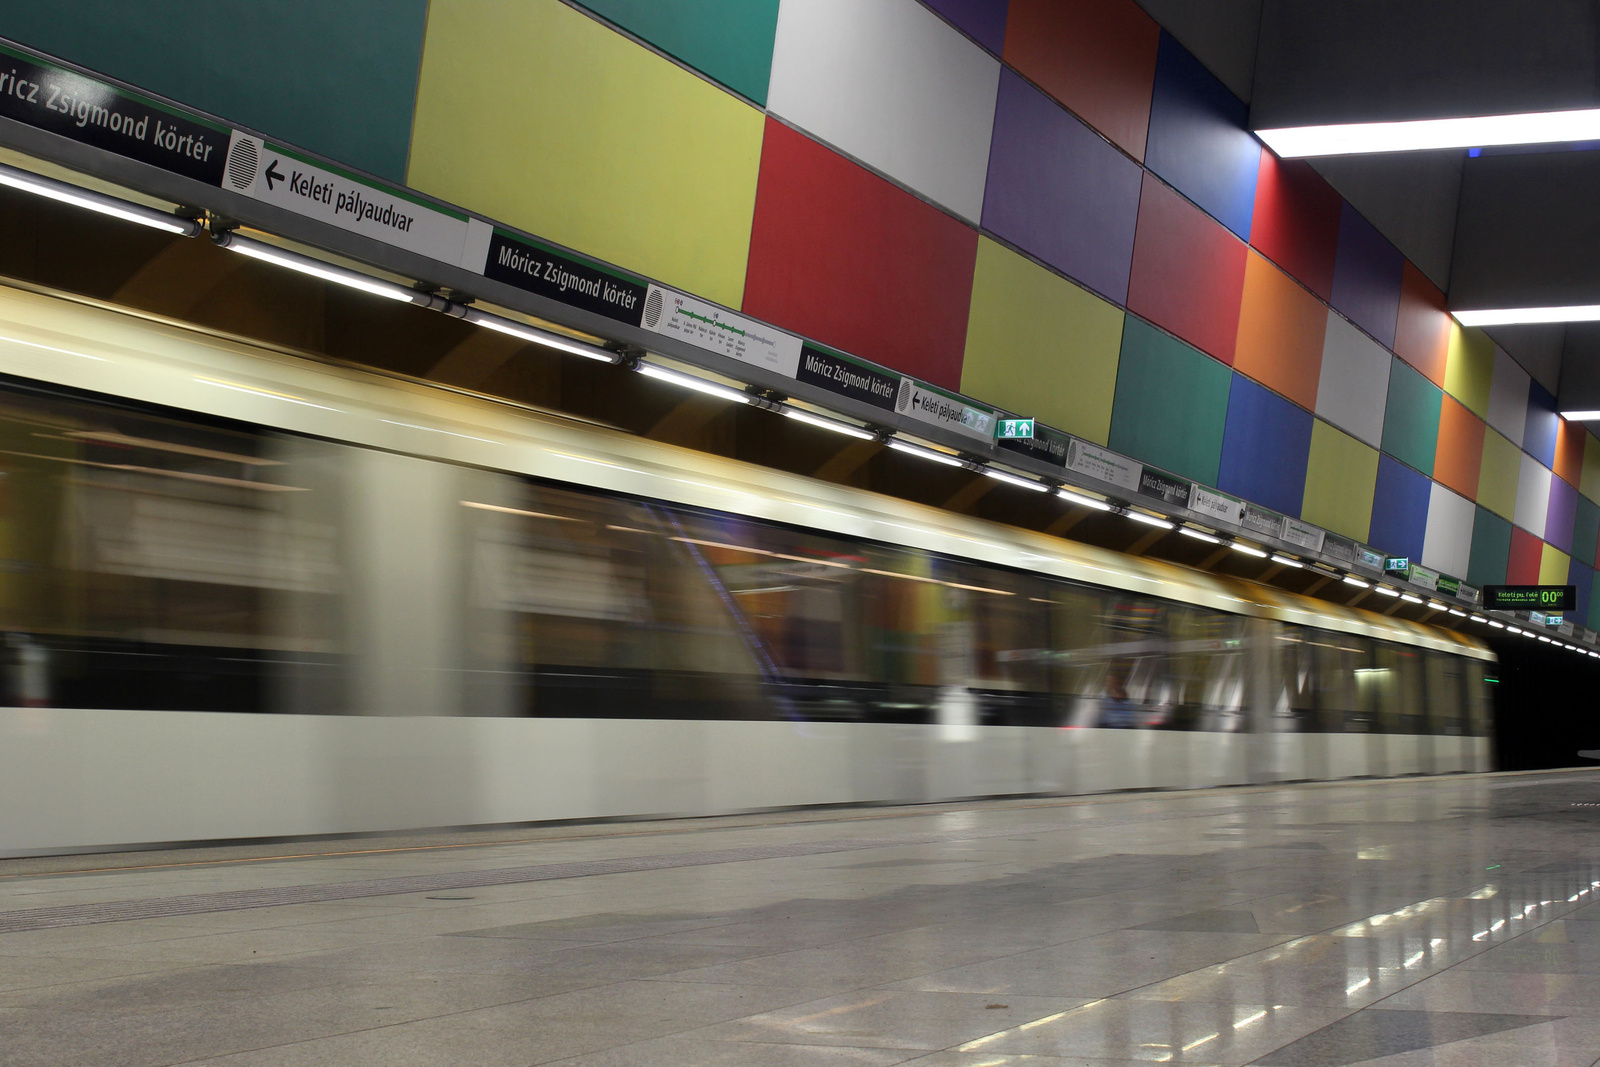 Metro4-MoriczZsigmondKorter-20150726-25